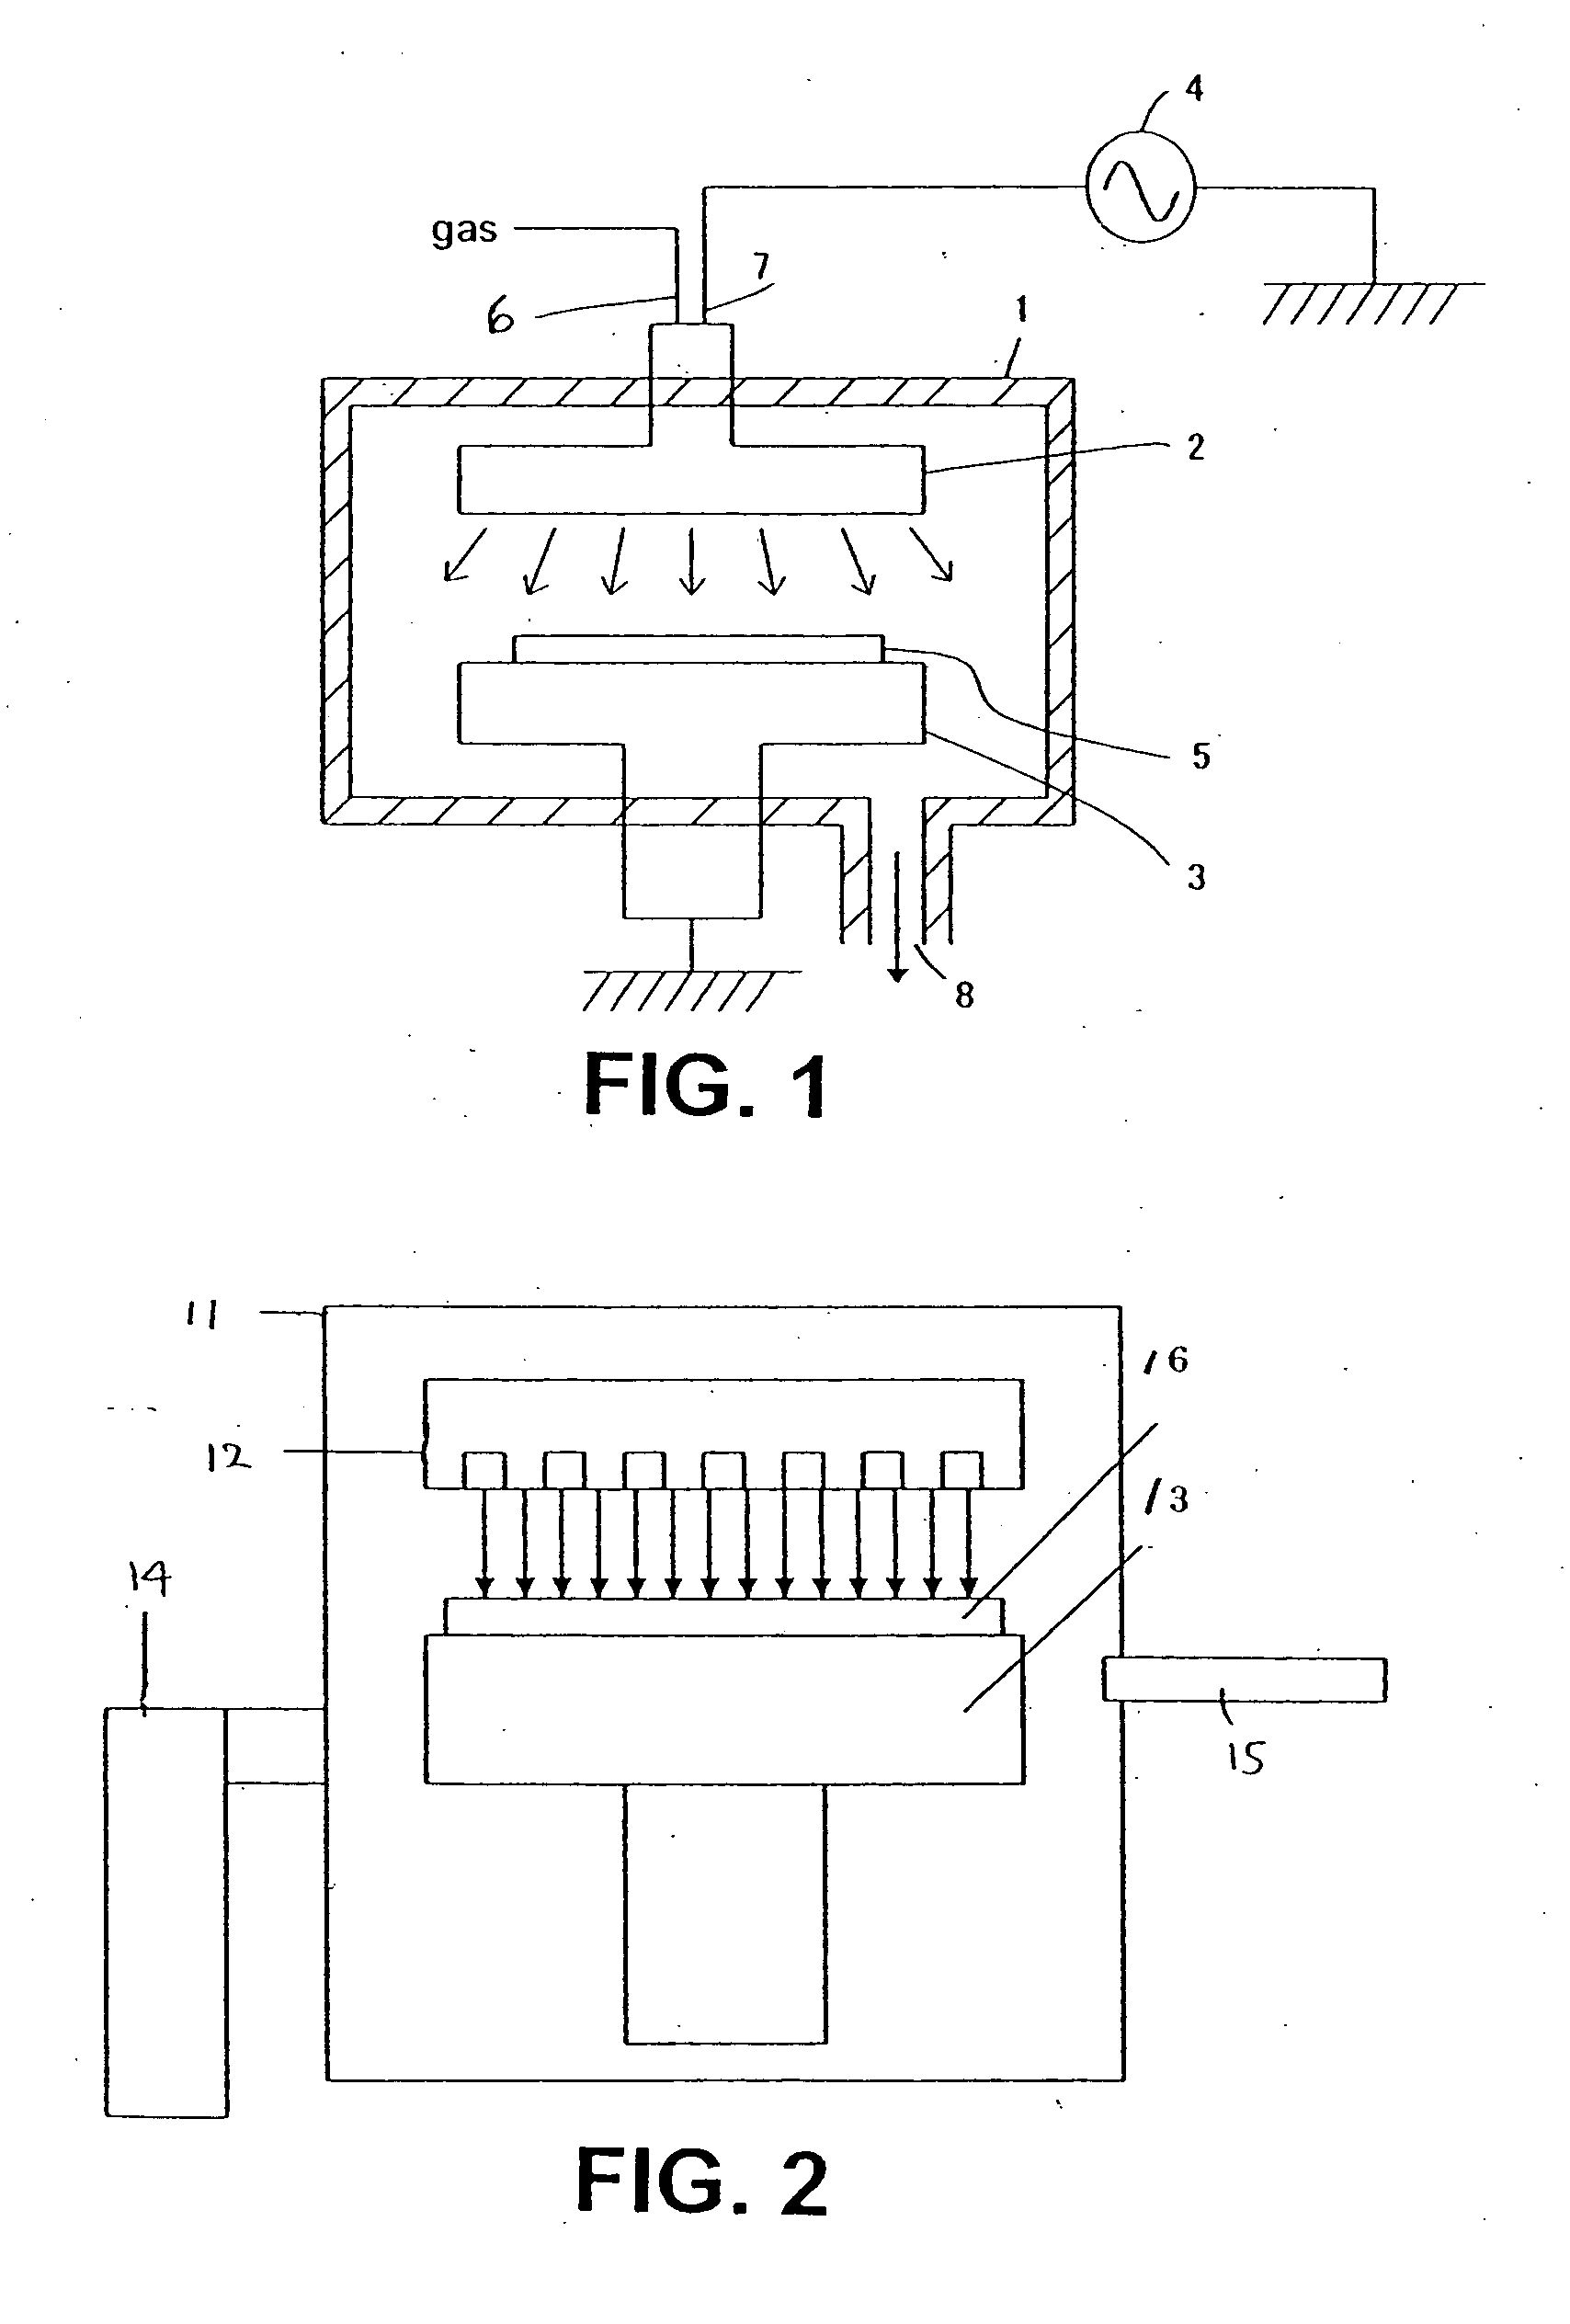 Method for forming insulation film having high density